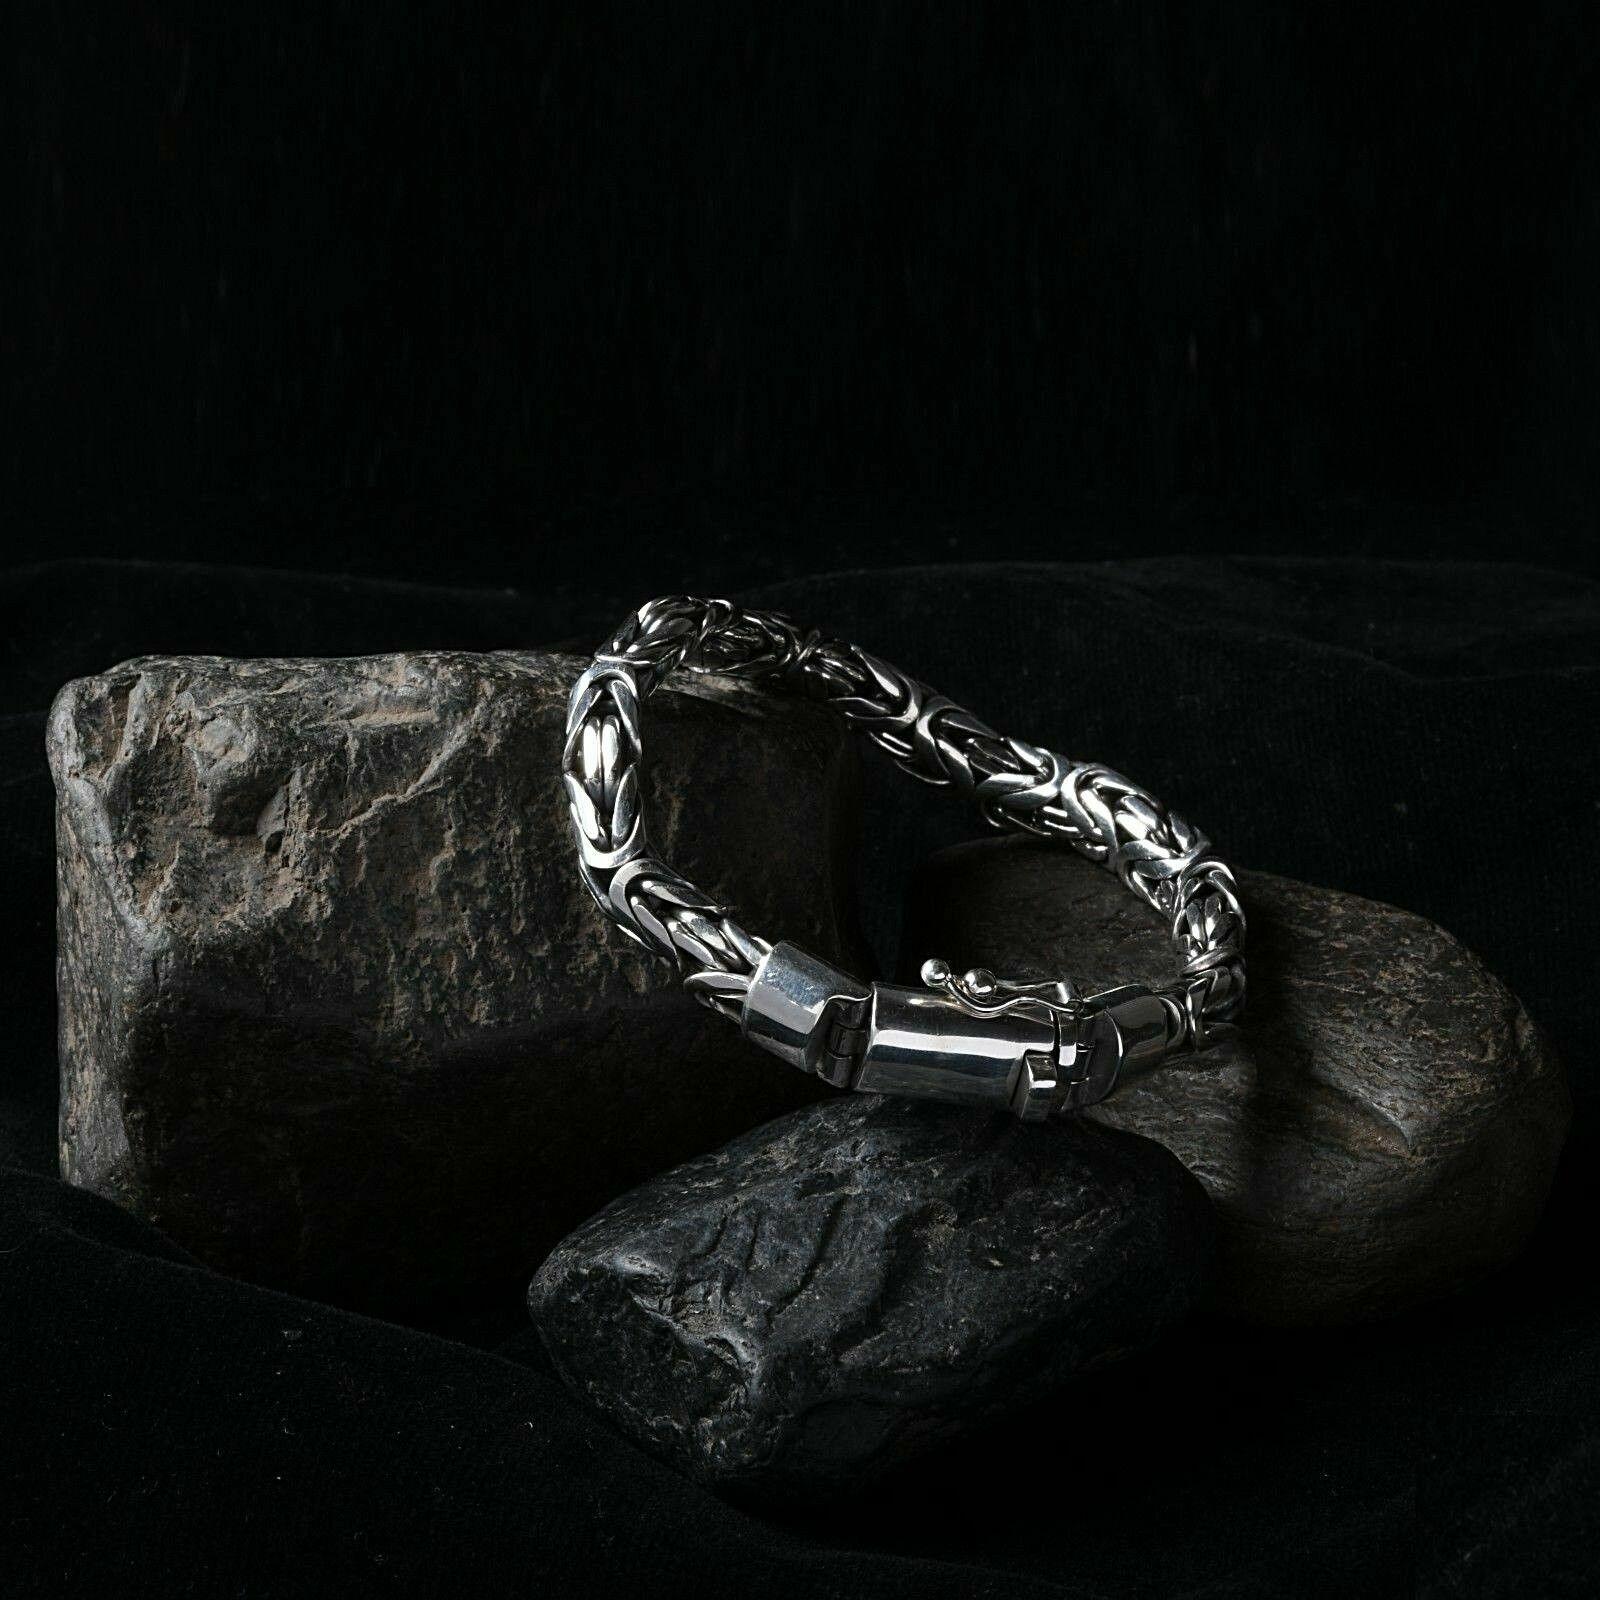 HEAVY Bali Handmade 8 mm Solid 925 Sterling Silver Oxidized Byzantine Bracelet - Inspiring Jewellery